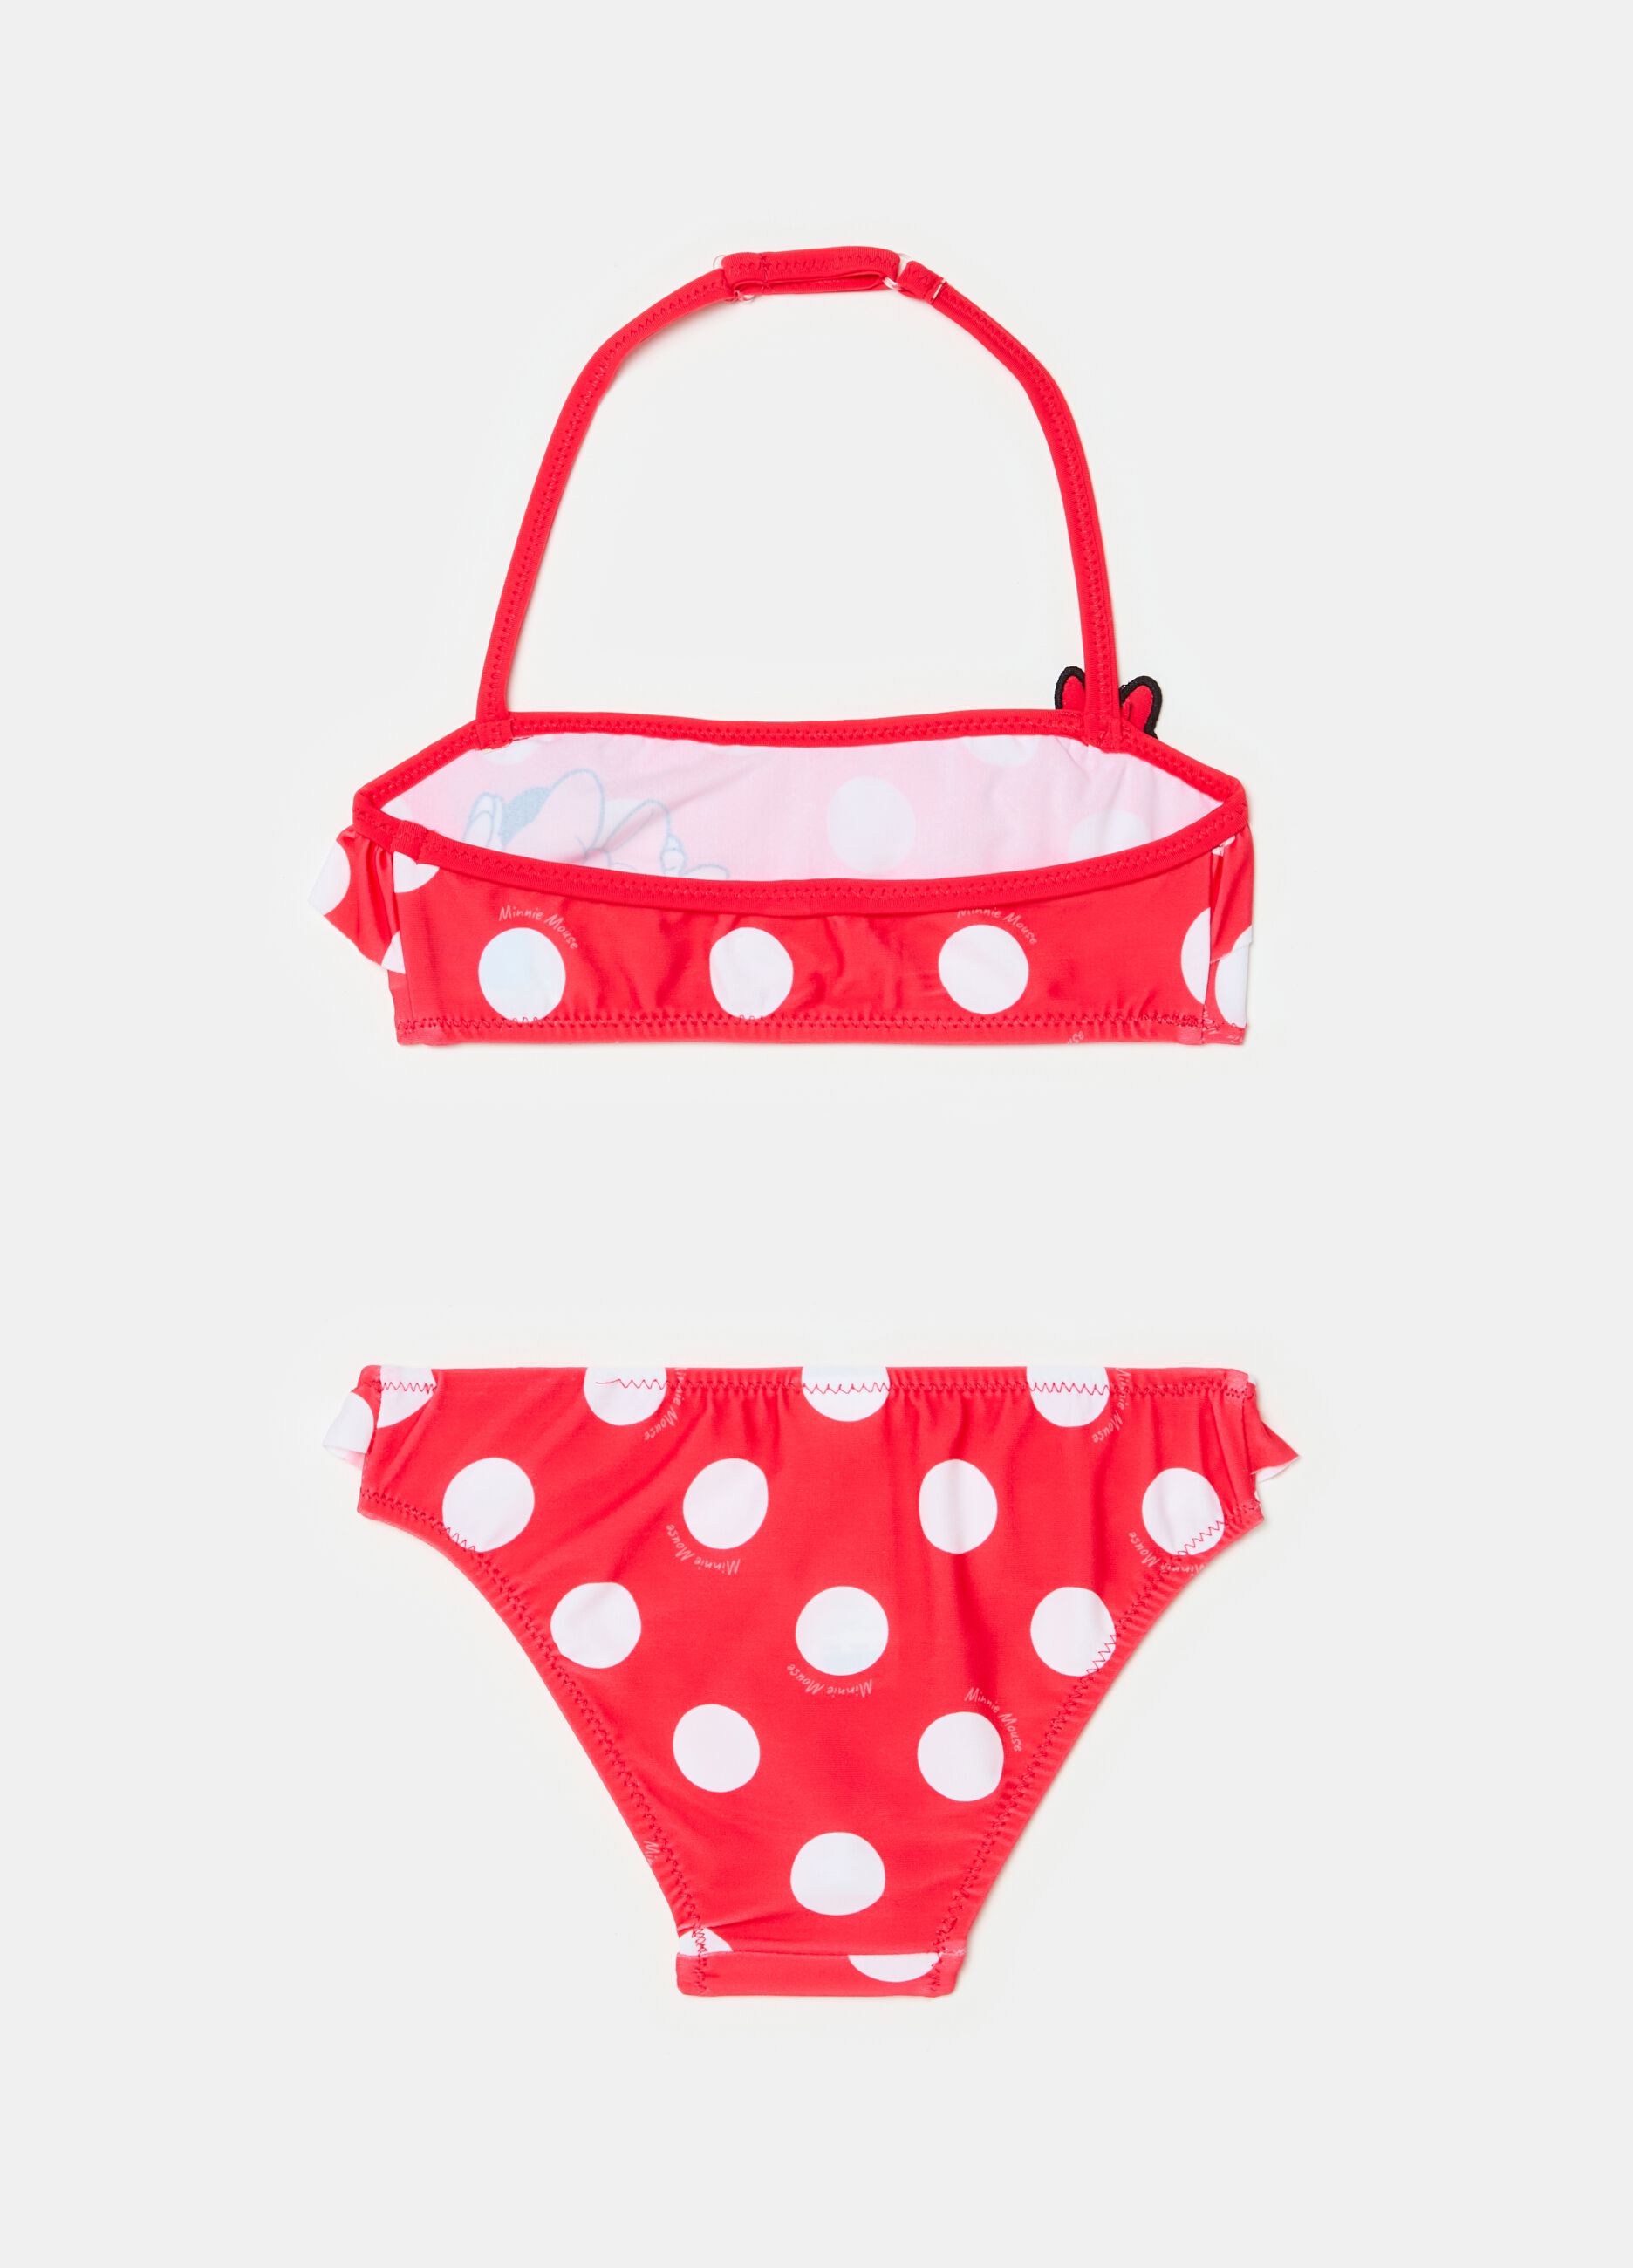 Bikini with polka dots pattern and Minnie Mouse print